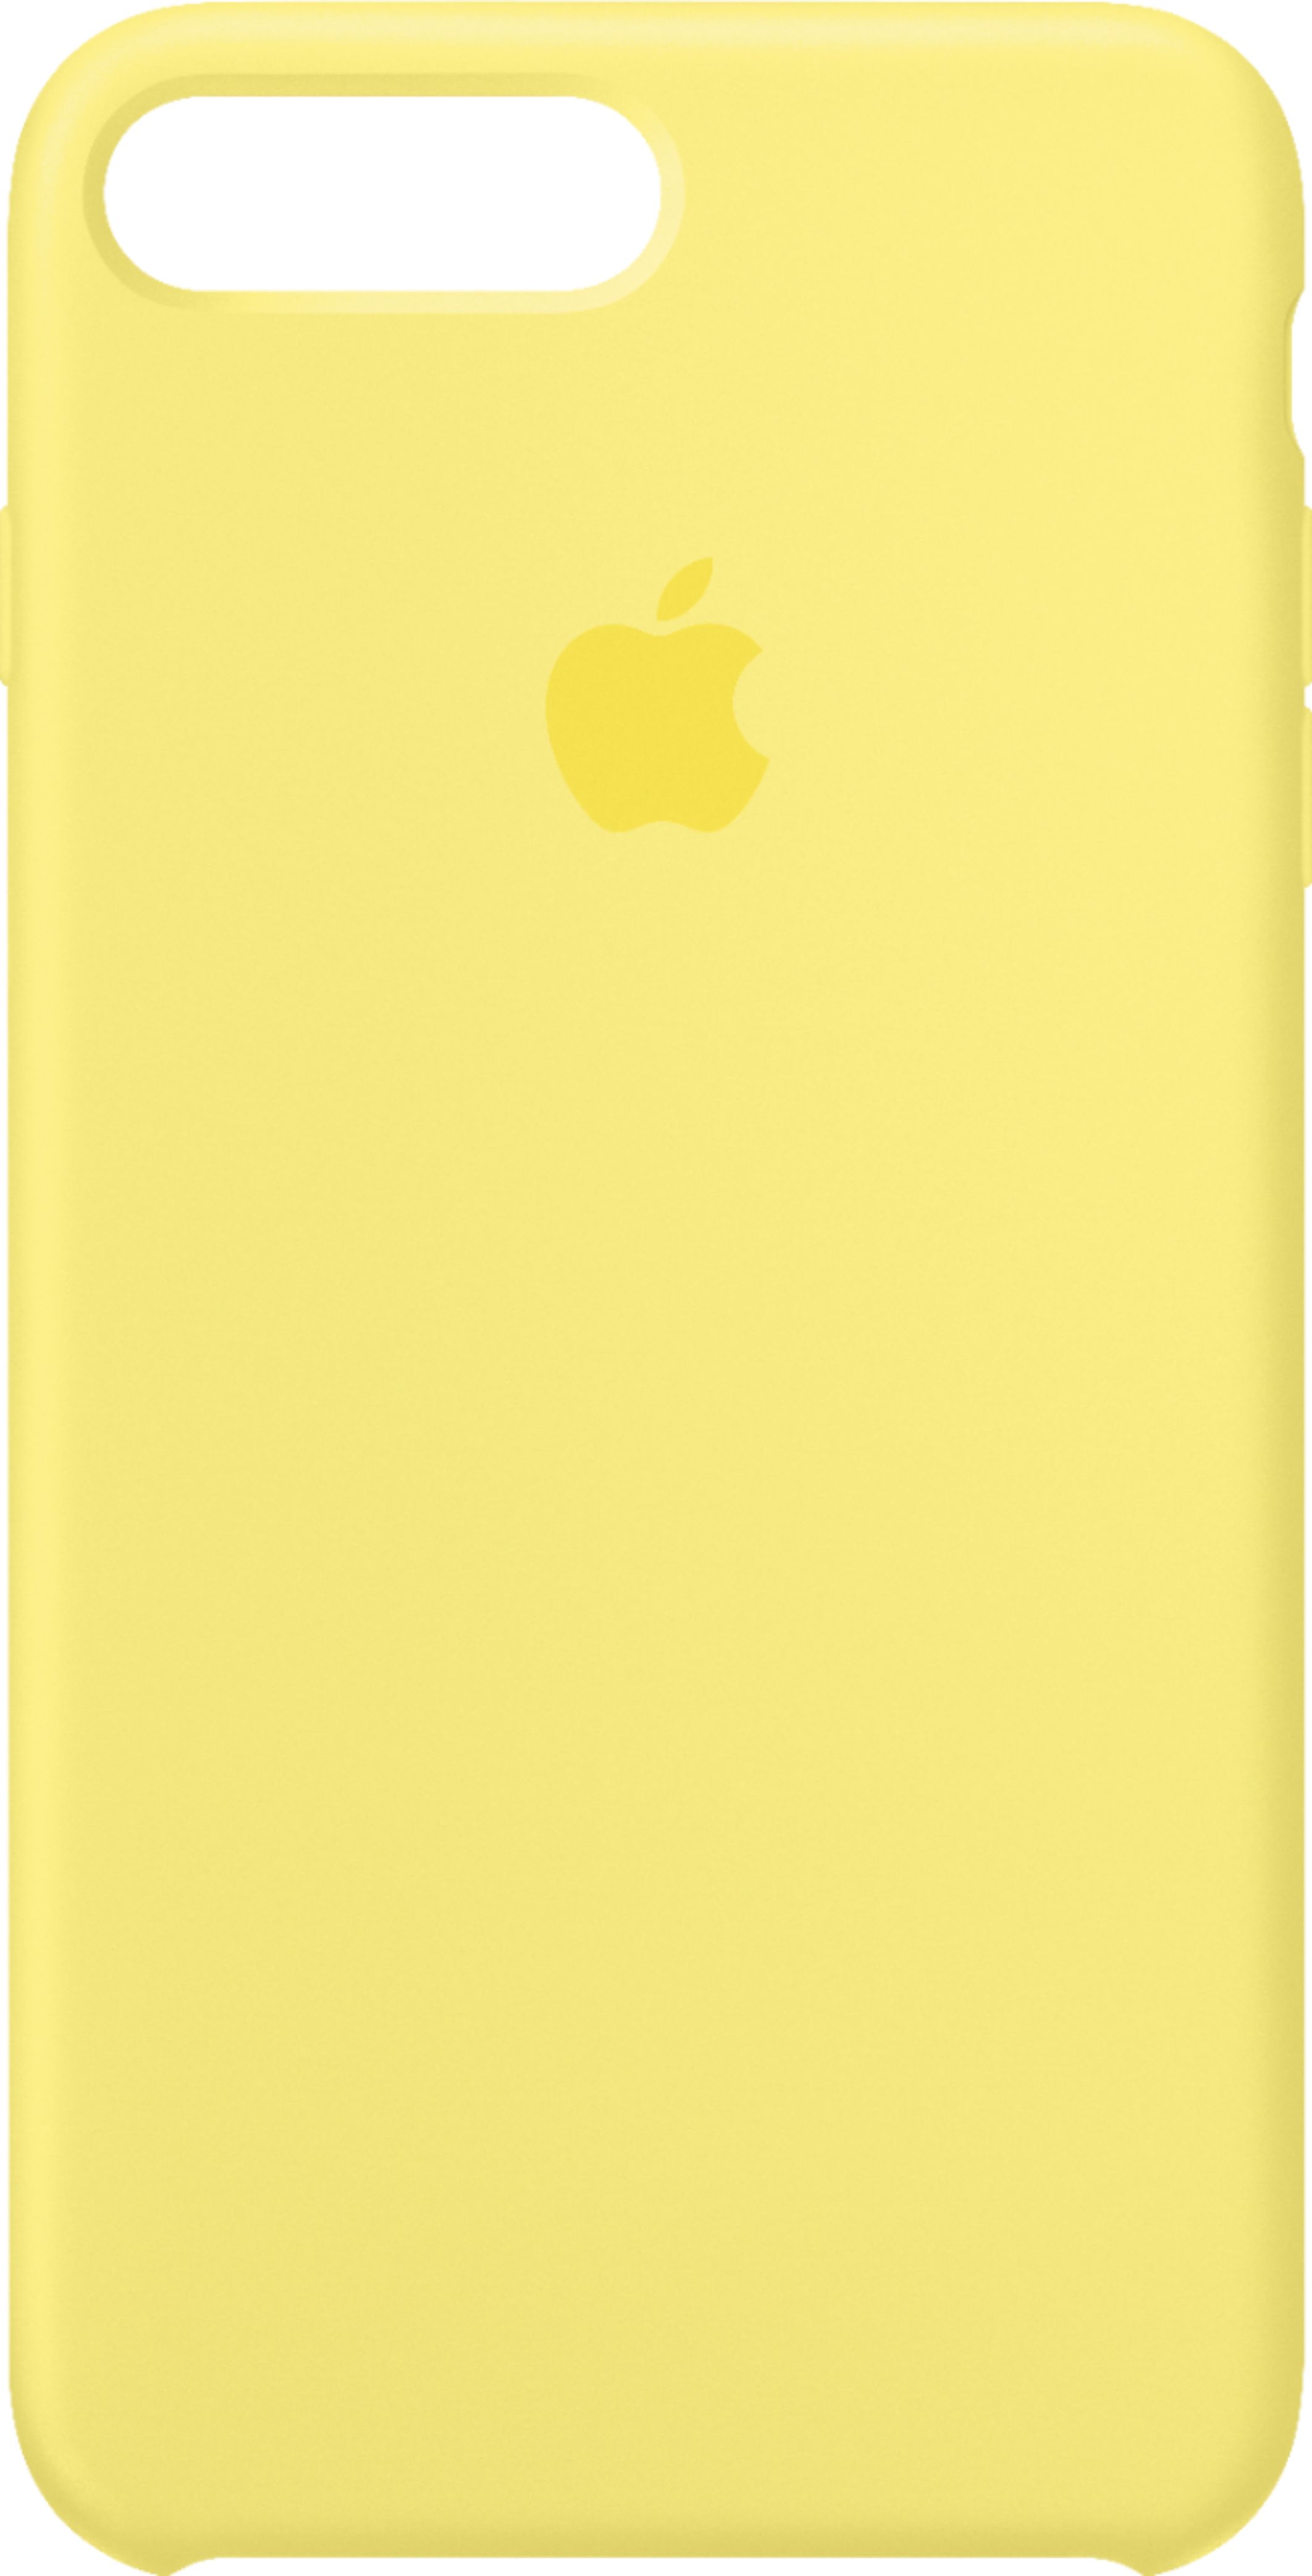 Apple iPhone® 8 Plus/7 Plus Silicone Case Lemonade MRFY2ZM/A - Best Buy